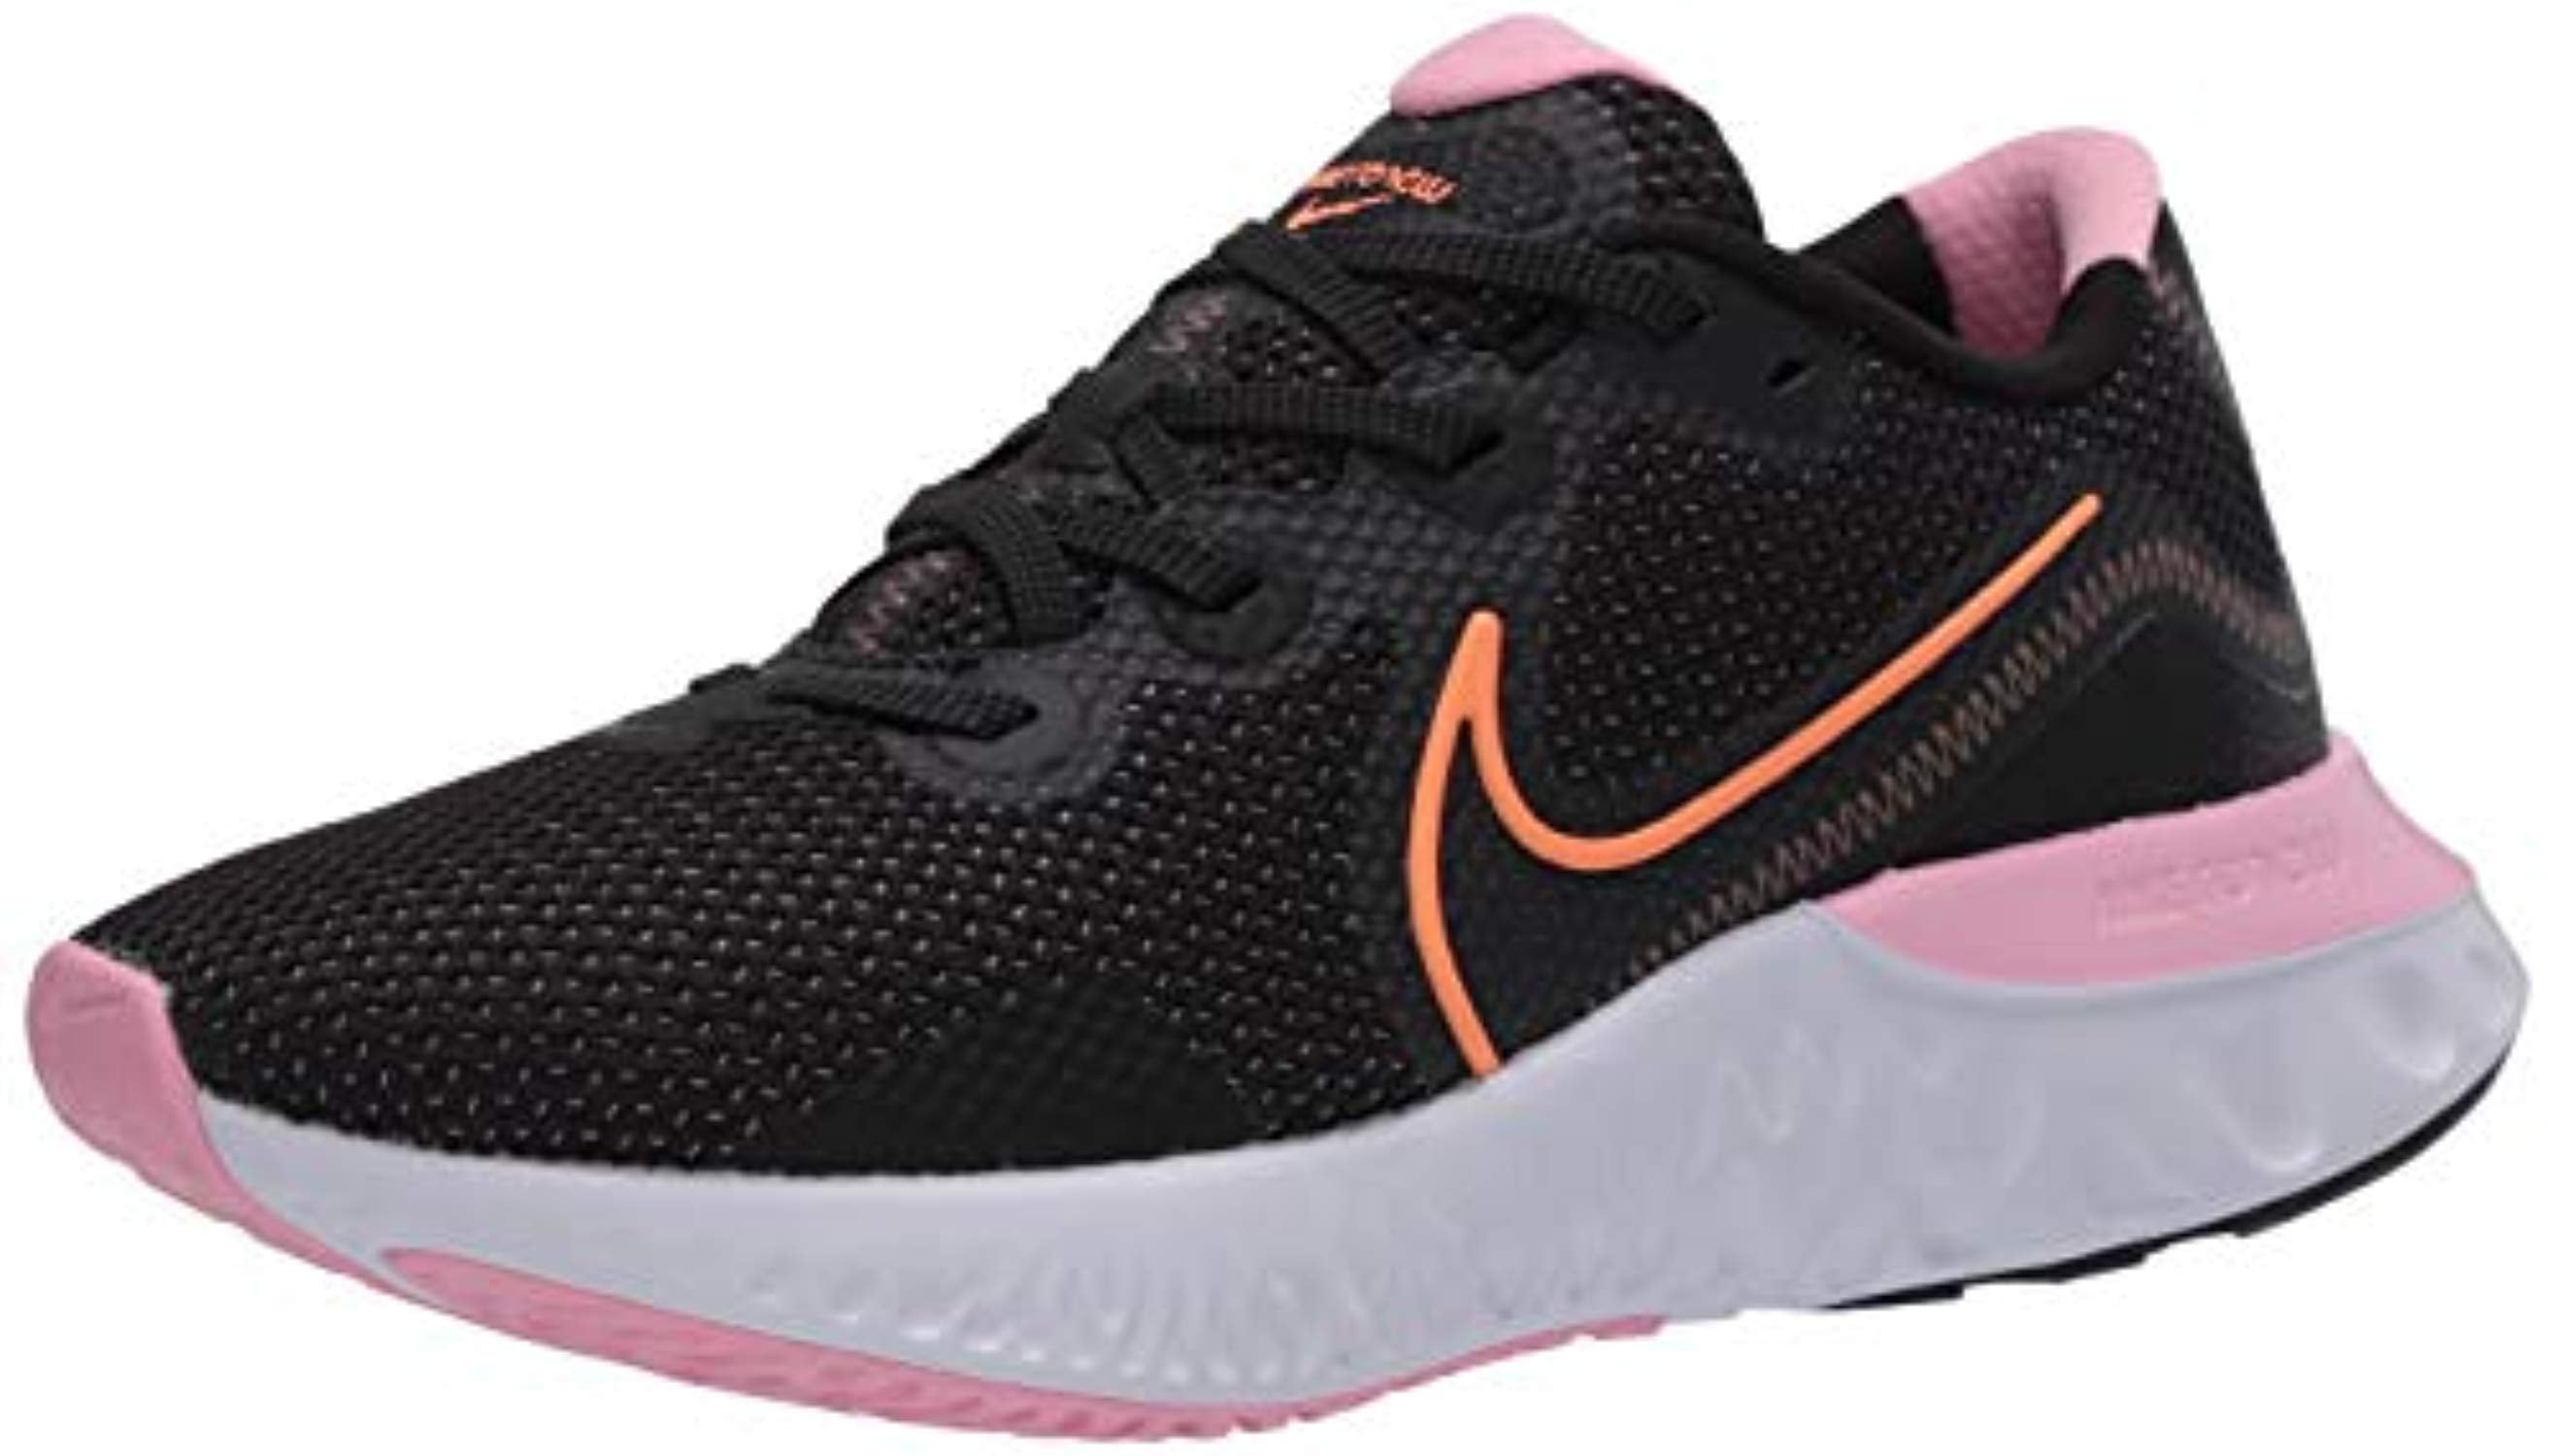 Nike Nike Women's Renew Run Running Shoes (Black/Pink